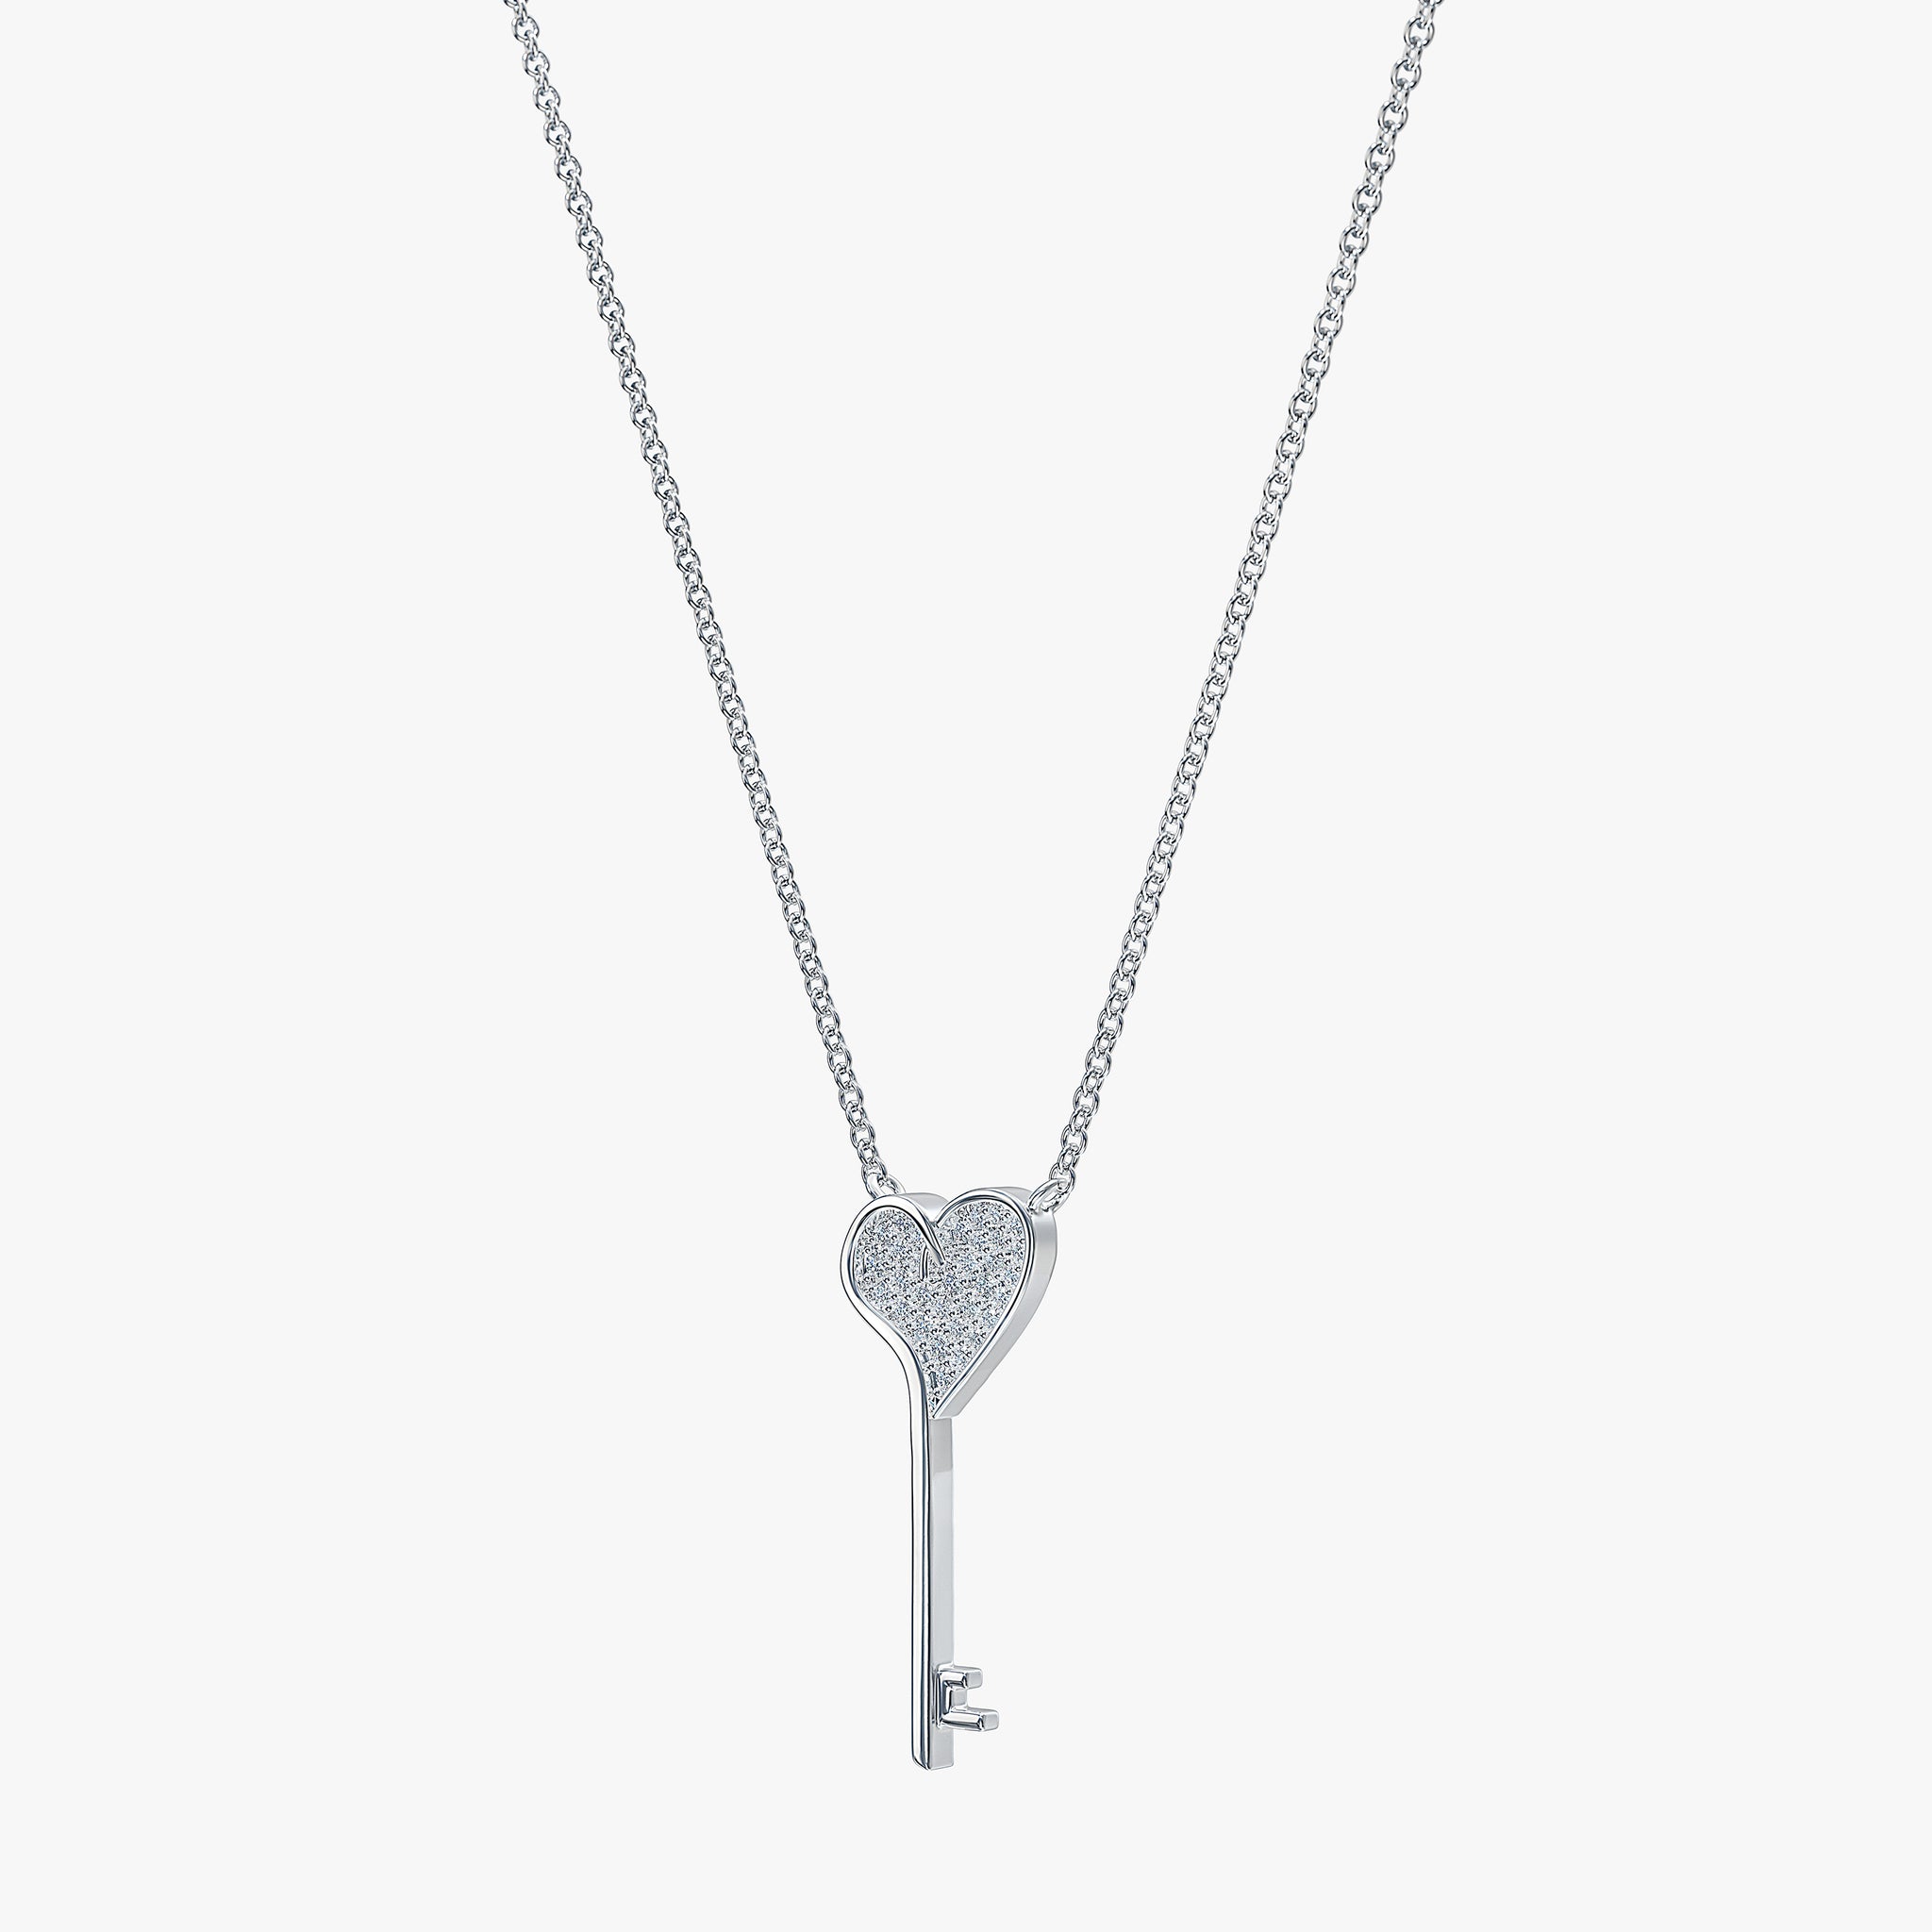 J'EVAR Sterling Silver Adjustable Heart Key ALTR Lab Grown Diamond Necklace Perspective View